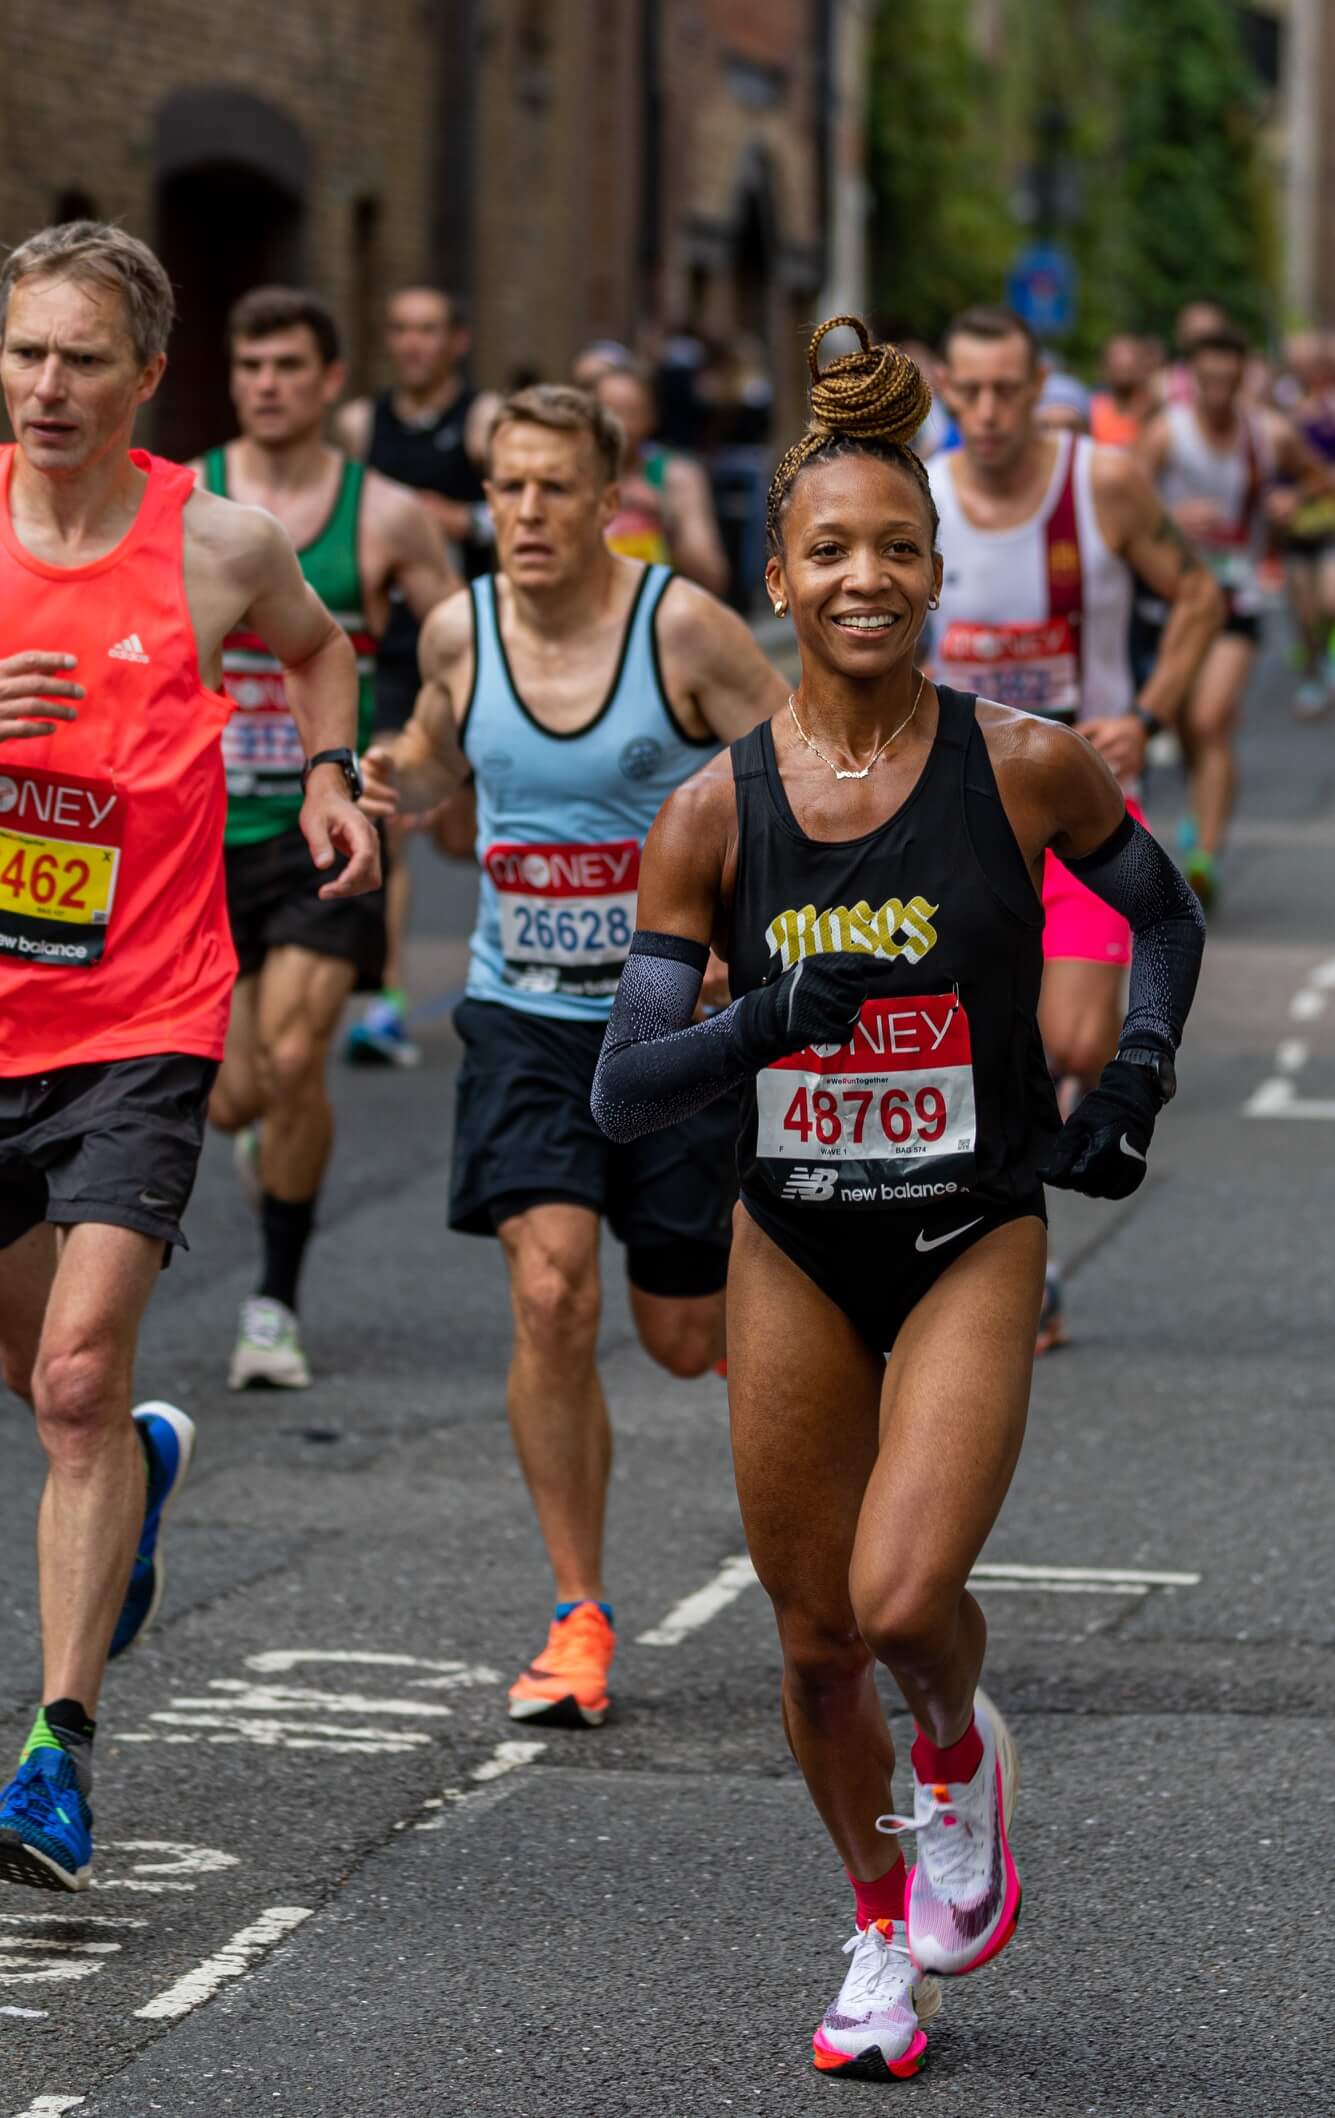 Sharada Maddox in the Black Female Marathon